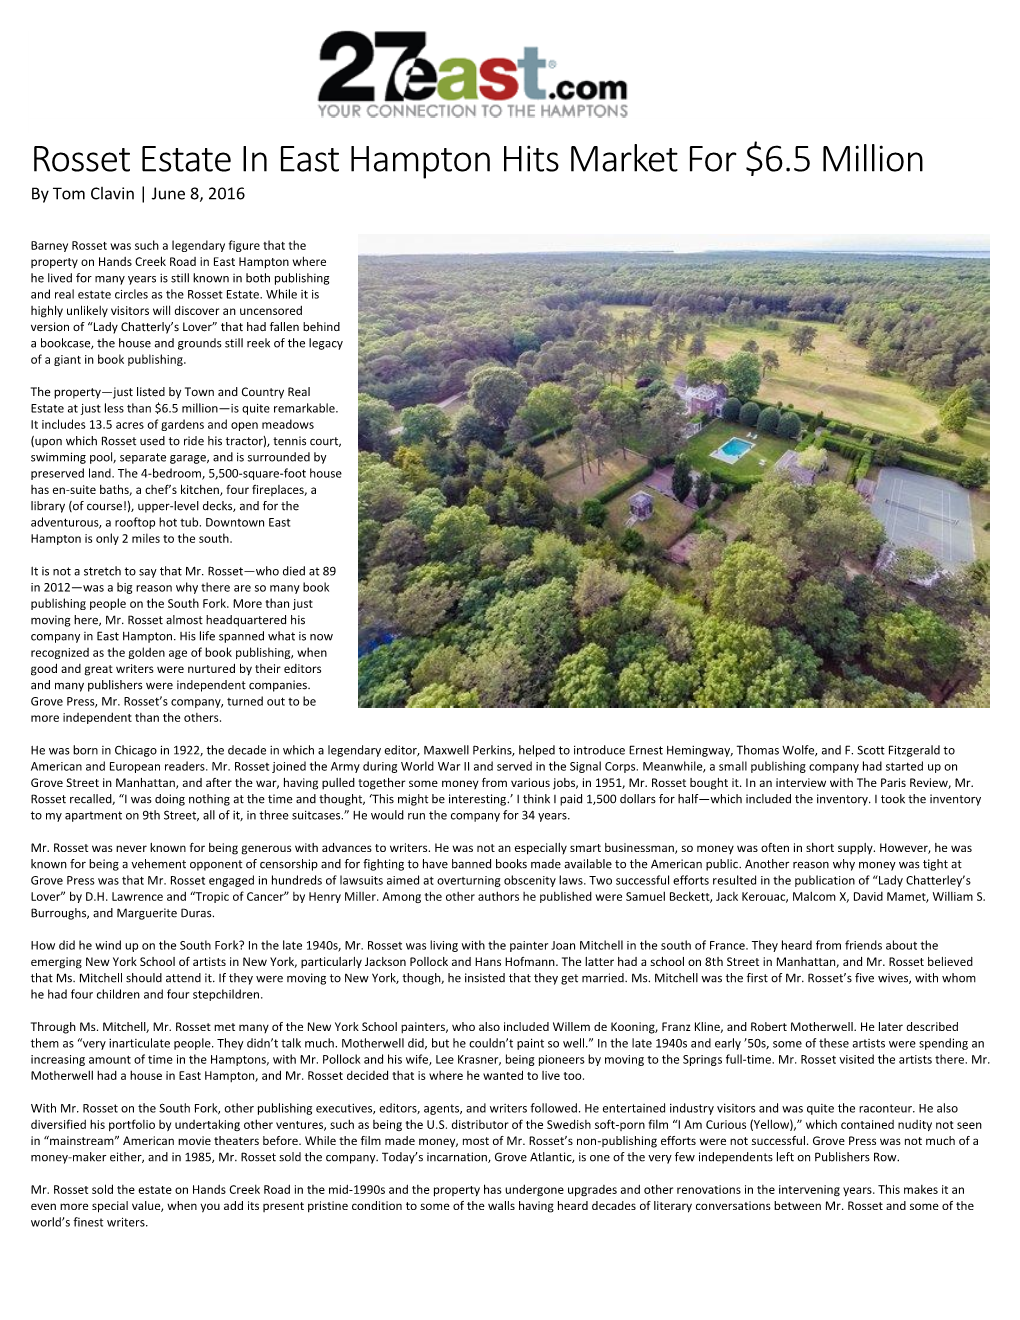 Rosset Estate in East Hampton Hits Market for $6.5 Million by Tom Clavin | June 8, 2016